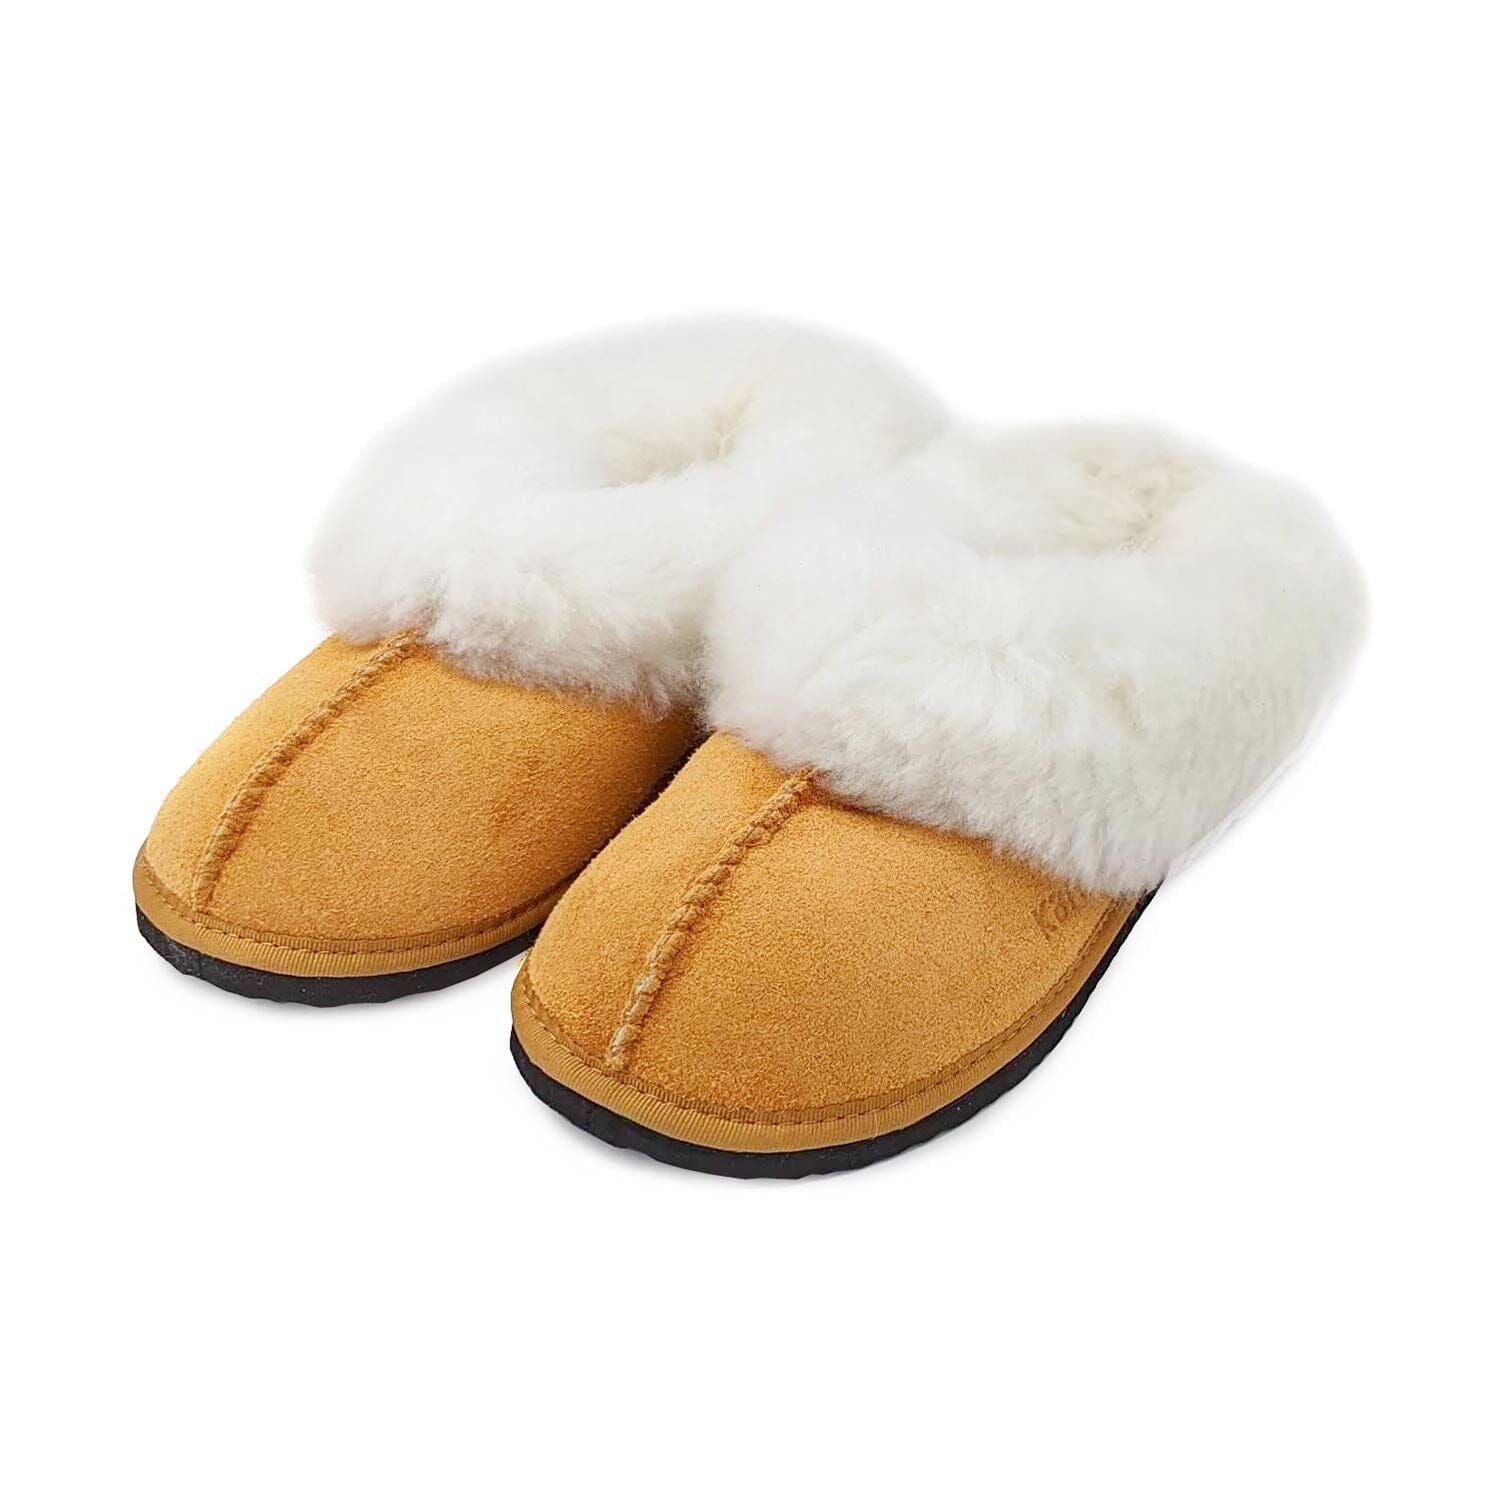 Karu Sleek Limited-Edition Tawny Yellow Sheepskin & Wool Slippers Slippers Karu Slippers 3 